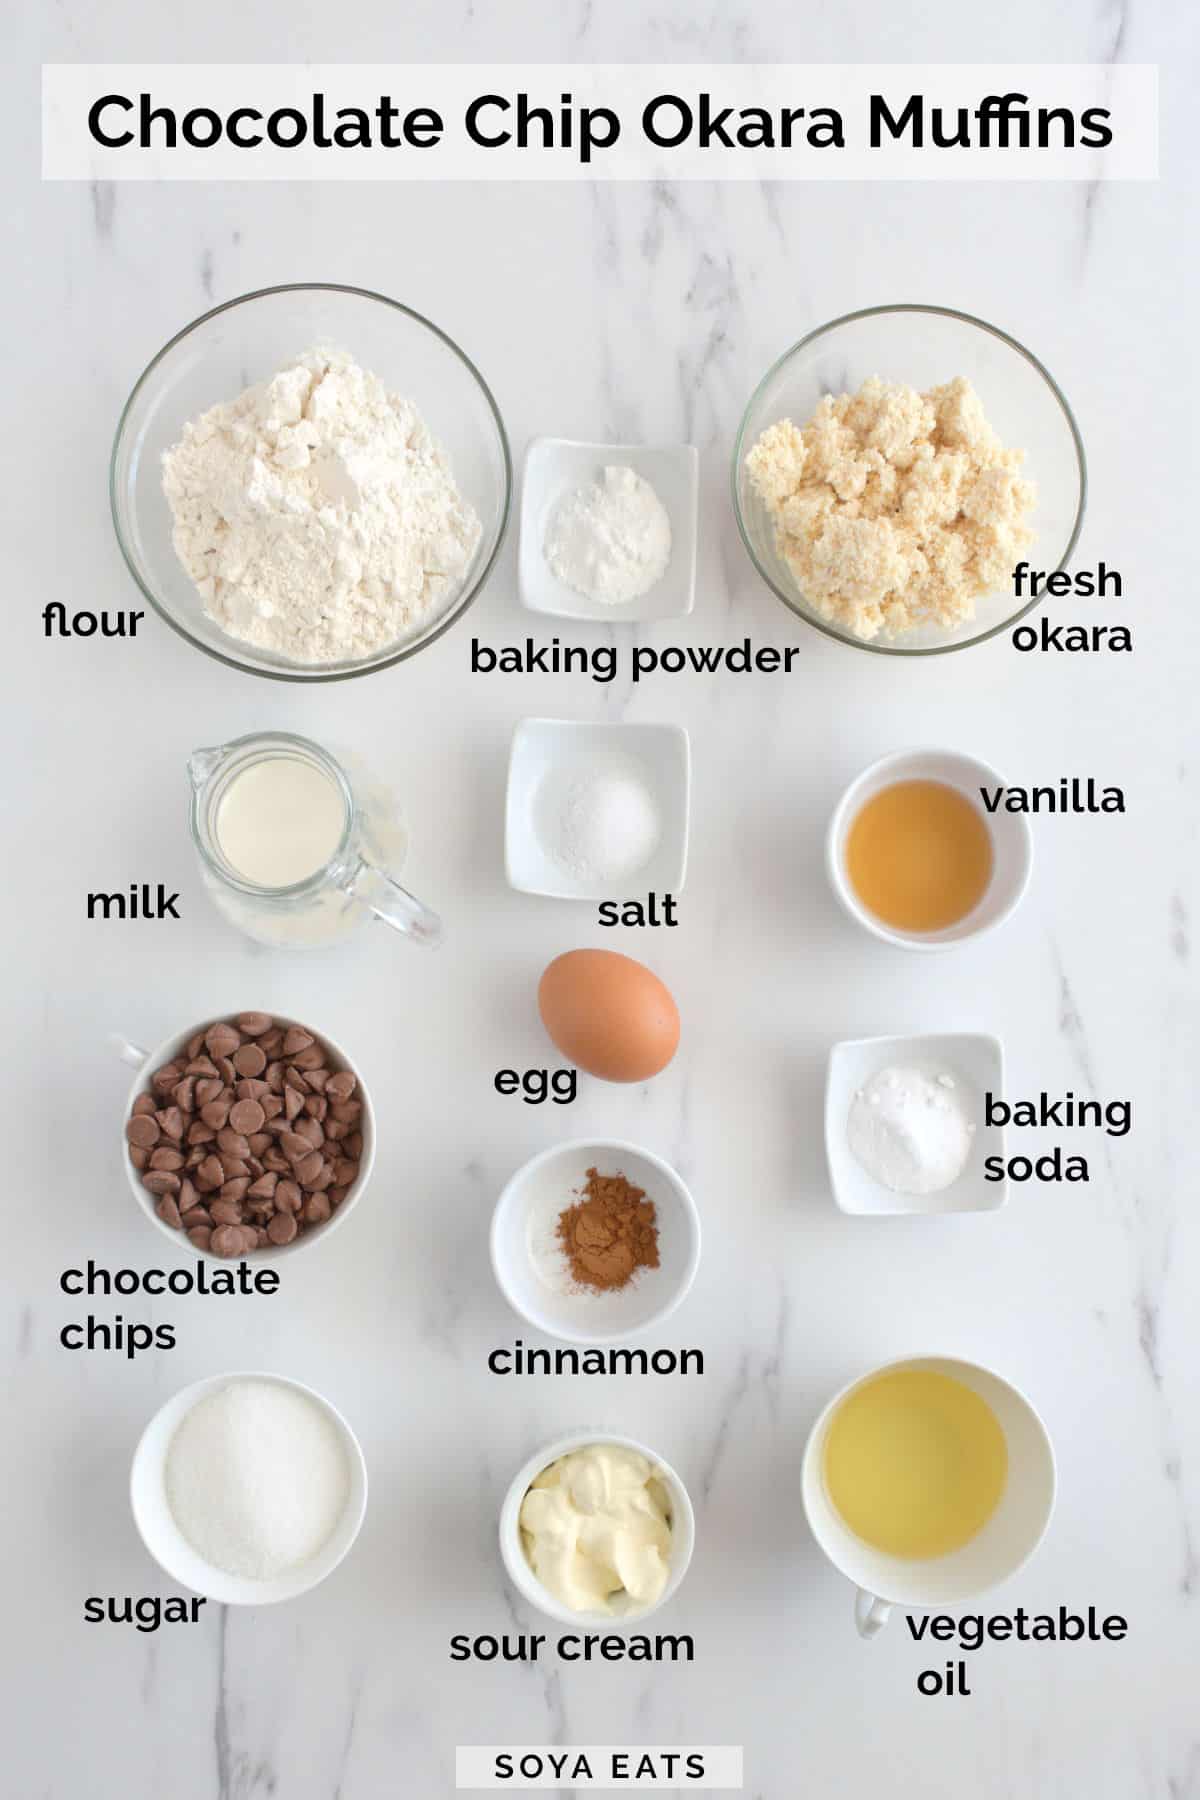 Image of ingredients needed to make chocolate chip okara muffins.